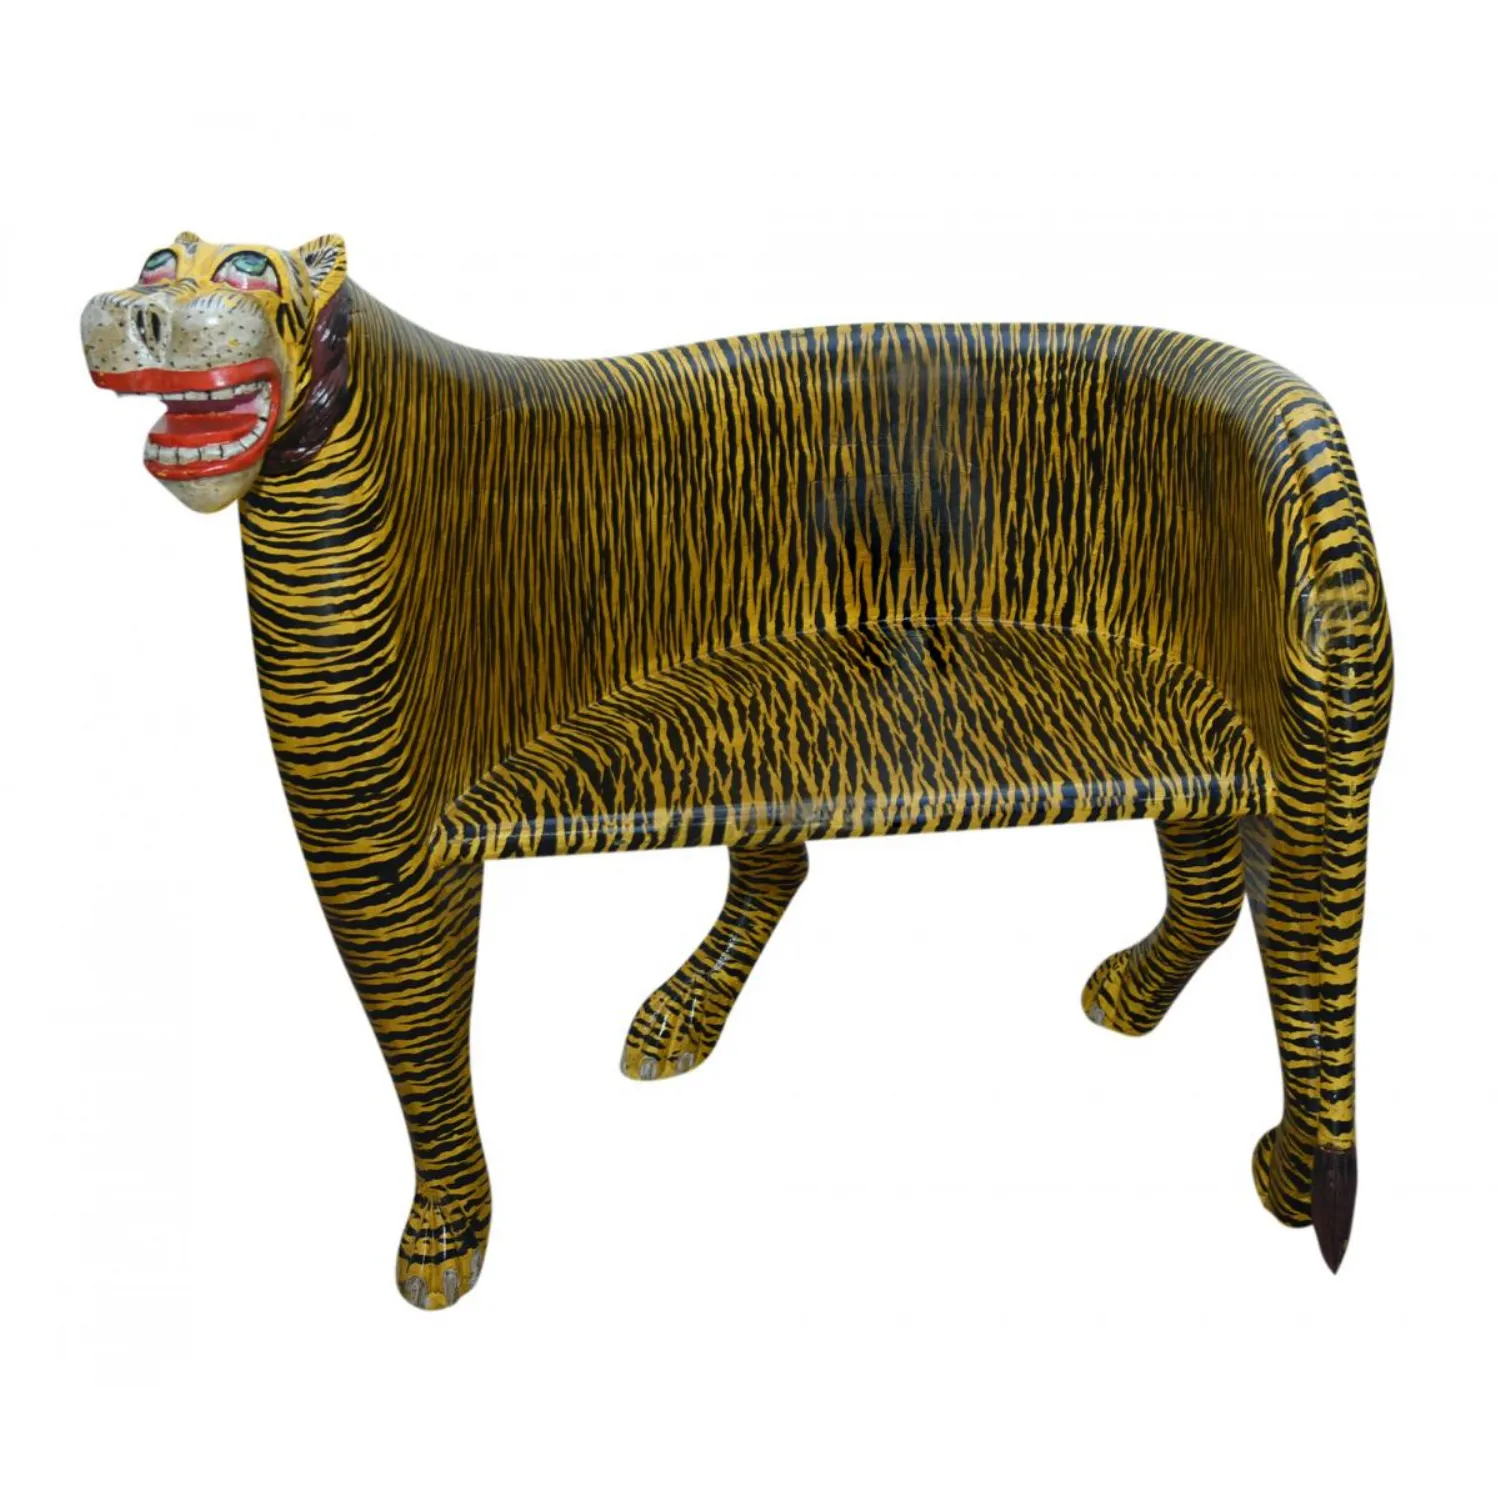 Tiger Chair